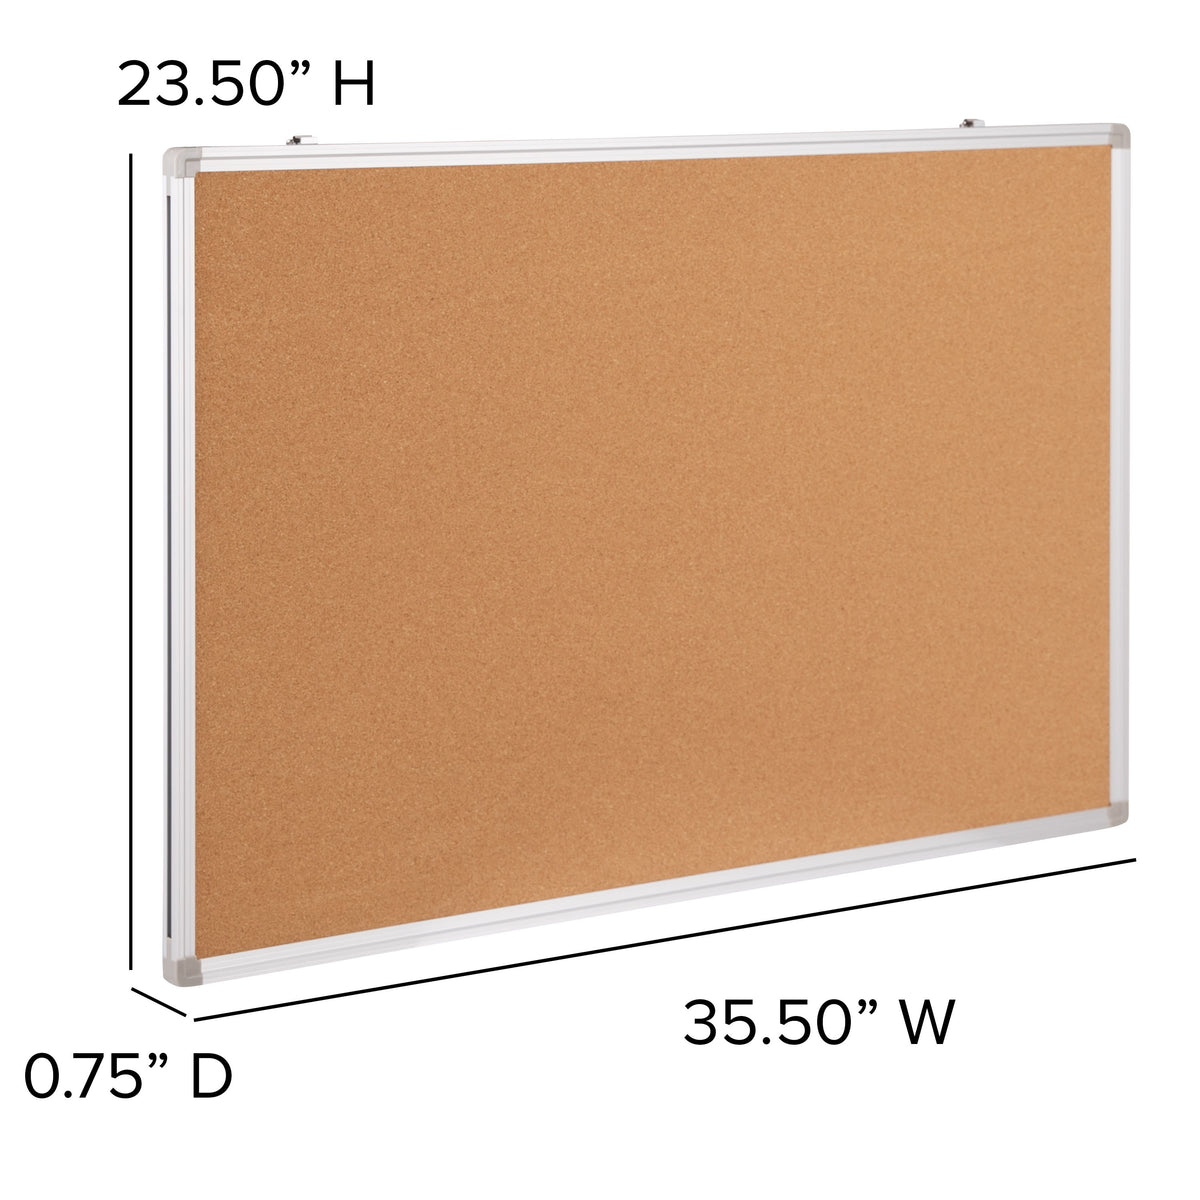 35.5"W x 23.5"H |#| 35.5"W x 23.5"H Wall Mounted Natural Cork Board - Aluminum Frame, Notes/Memos